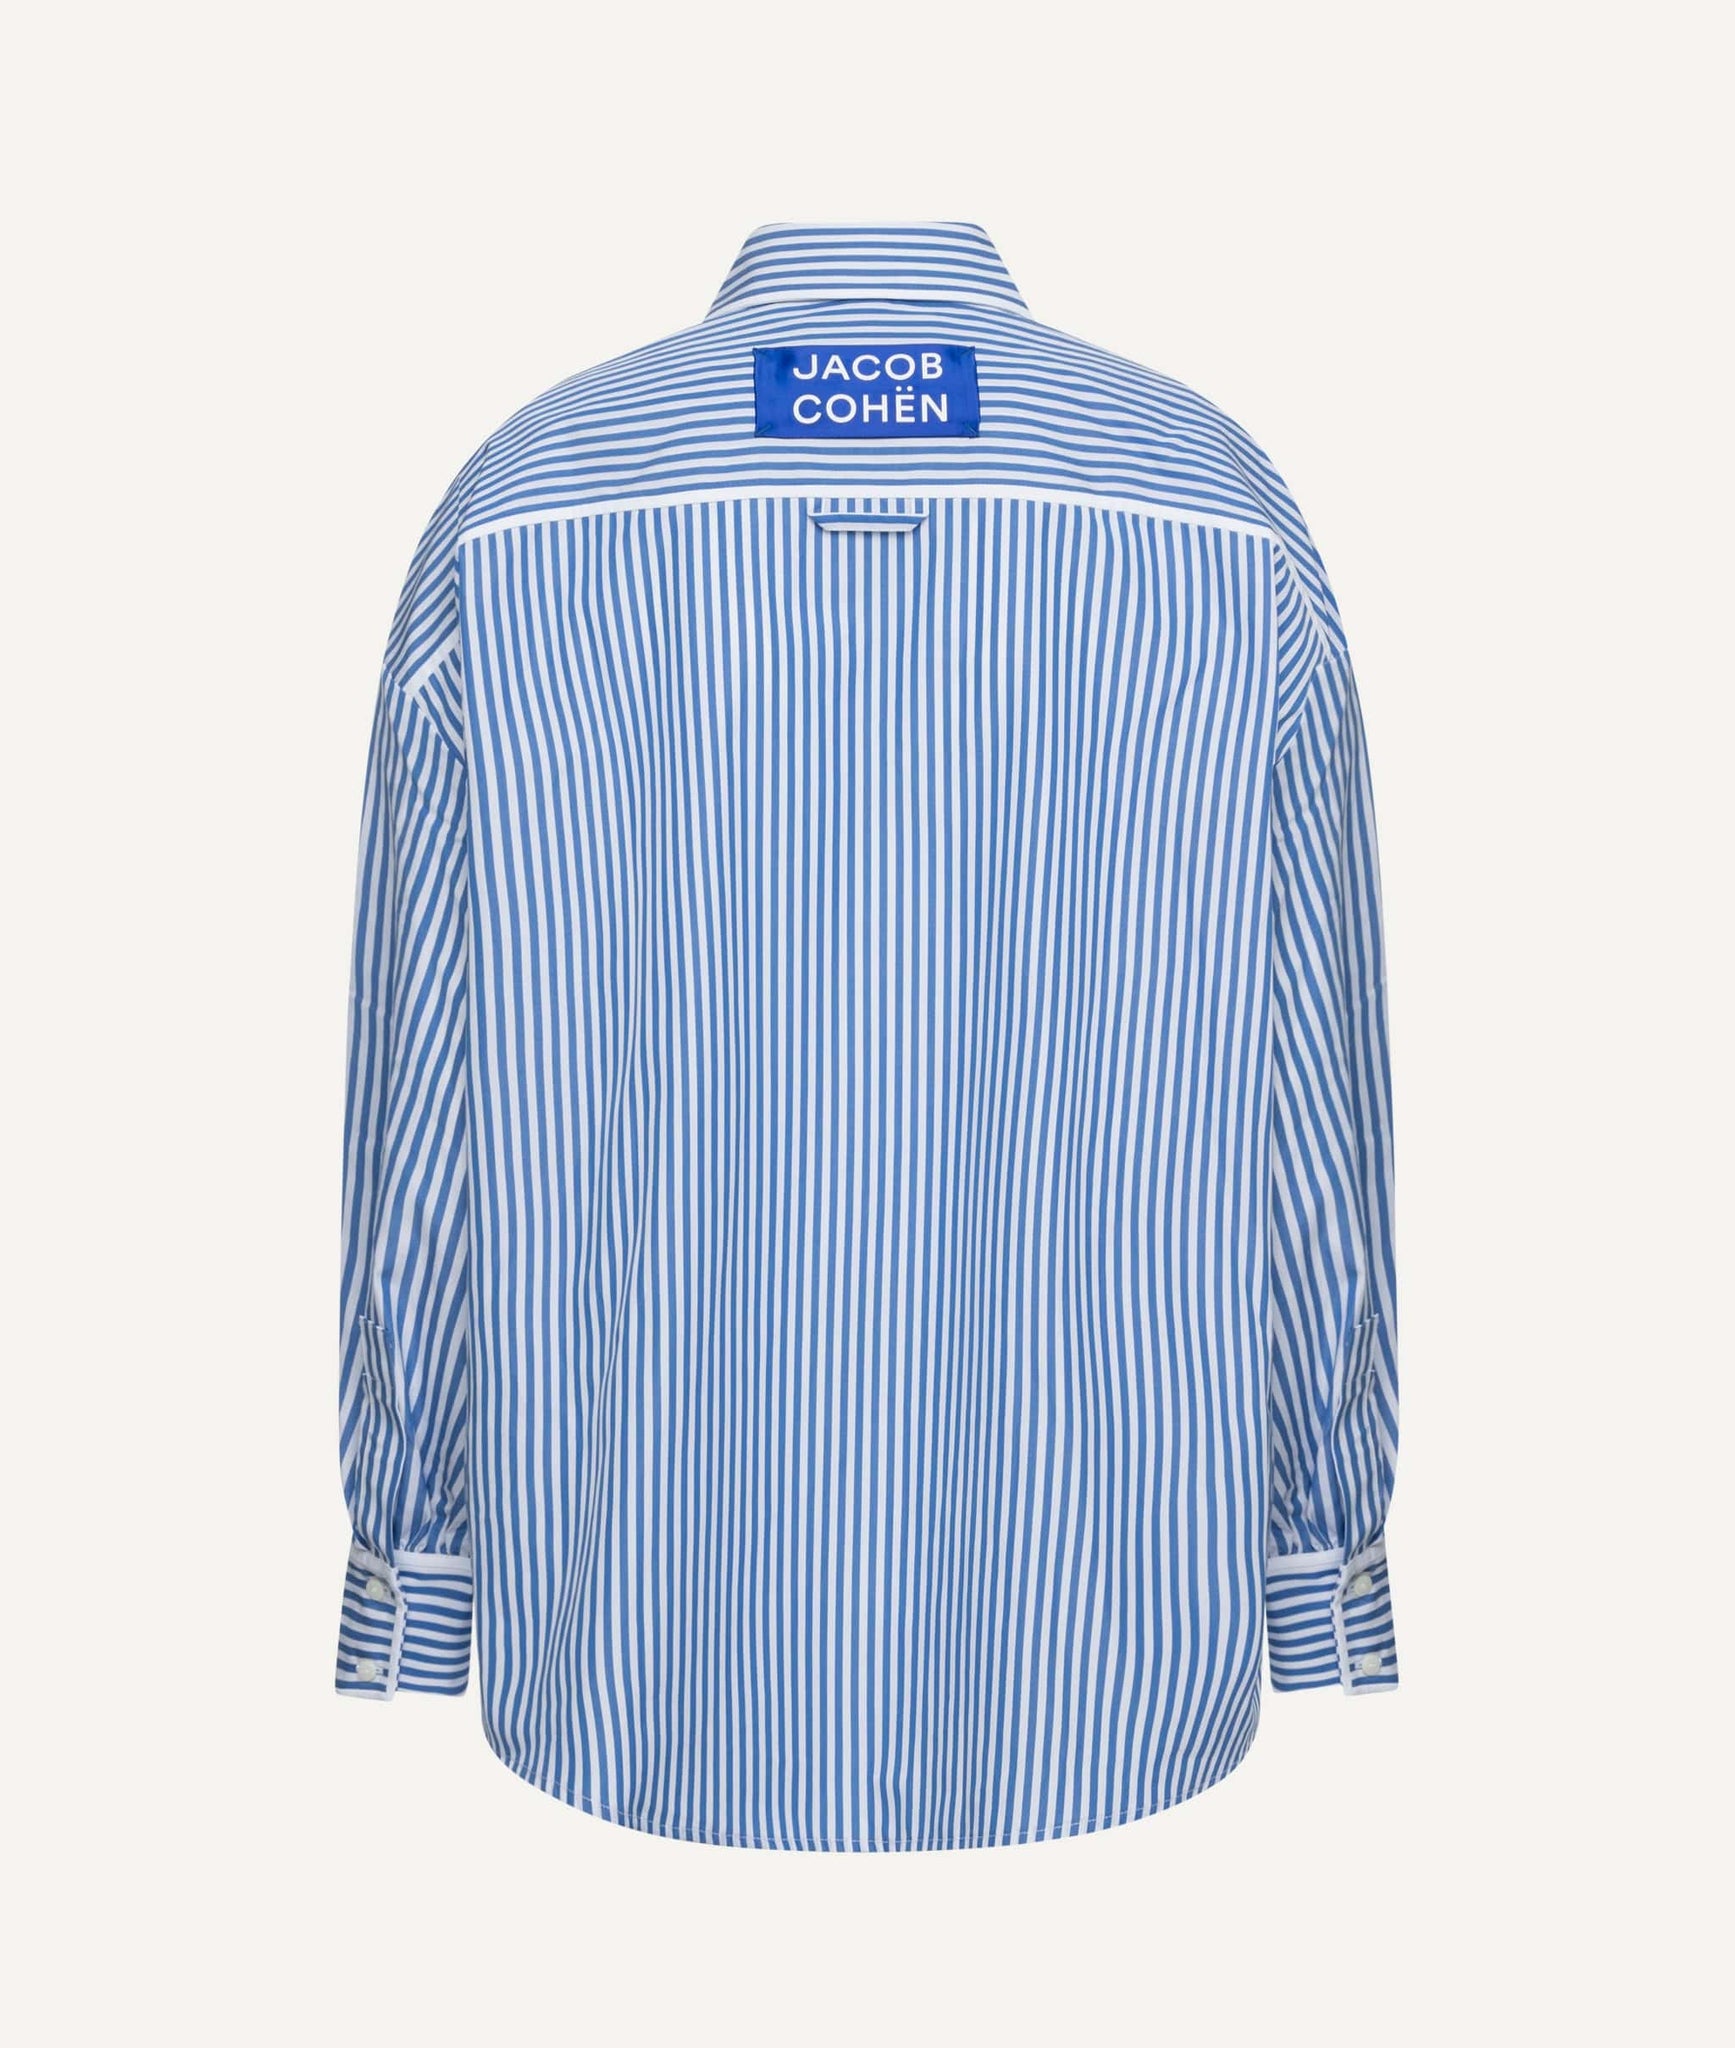 Jacob Cohen - Striped Shirt in Cotton